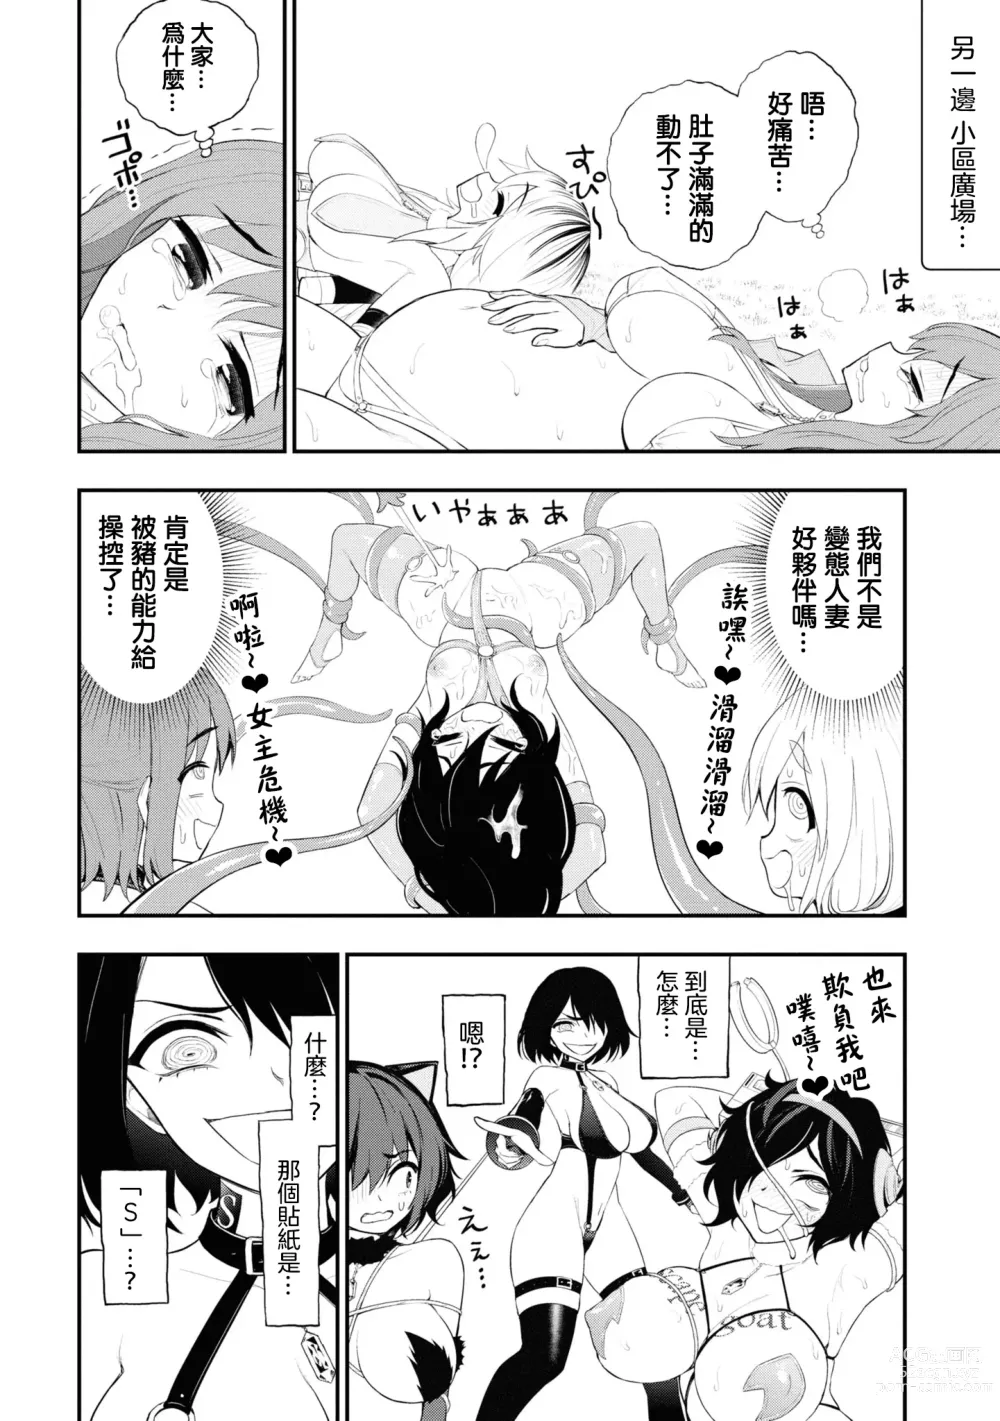 Page 58 of manga 淫獄小區 15-17話